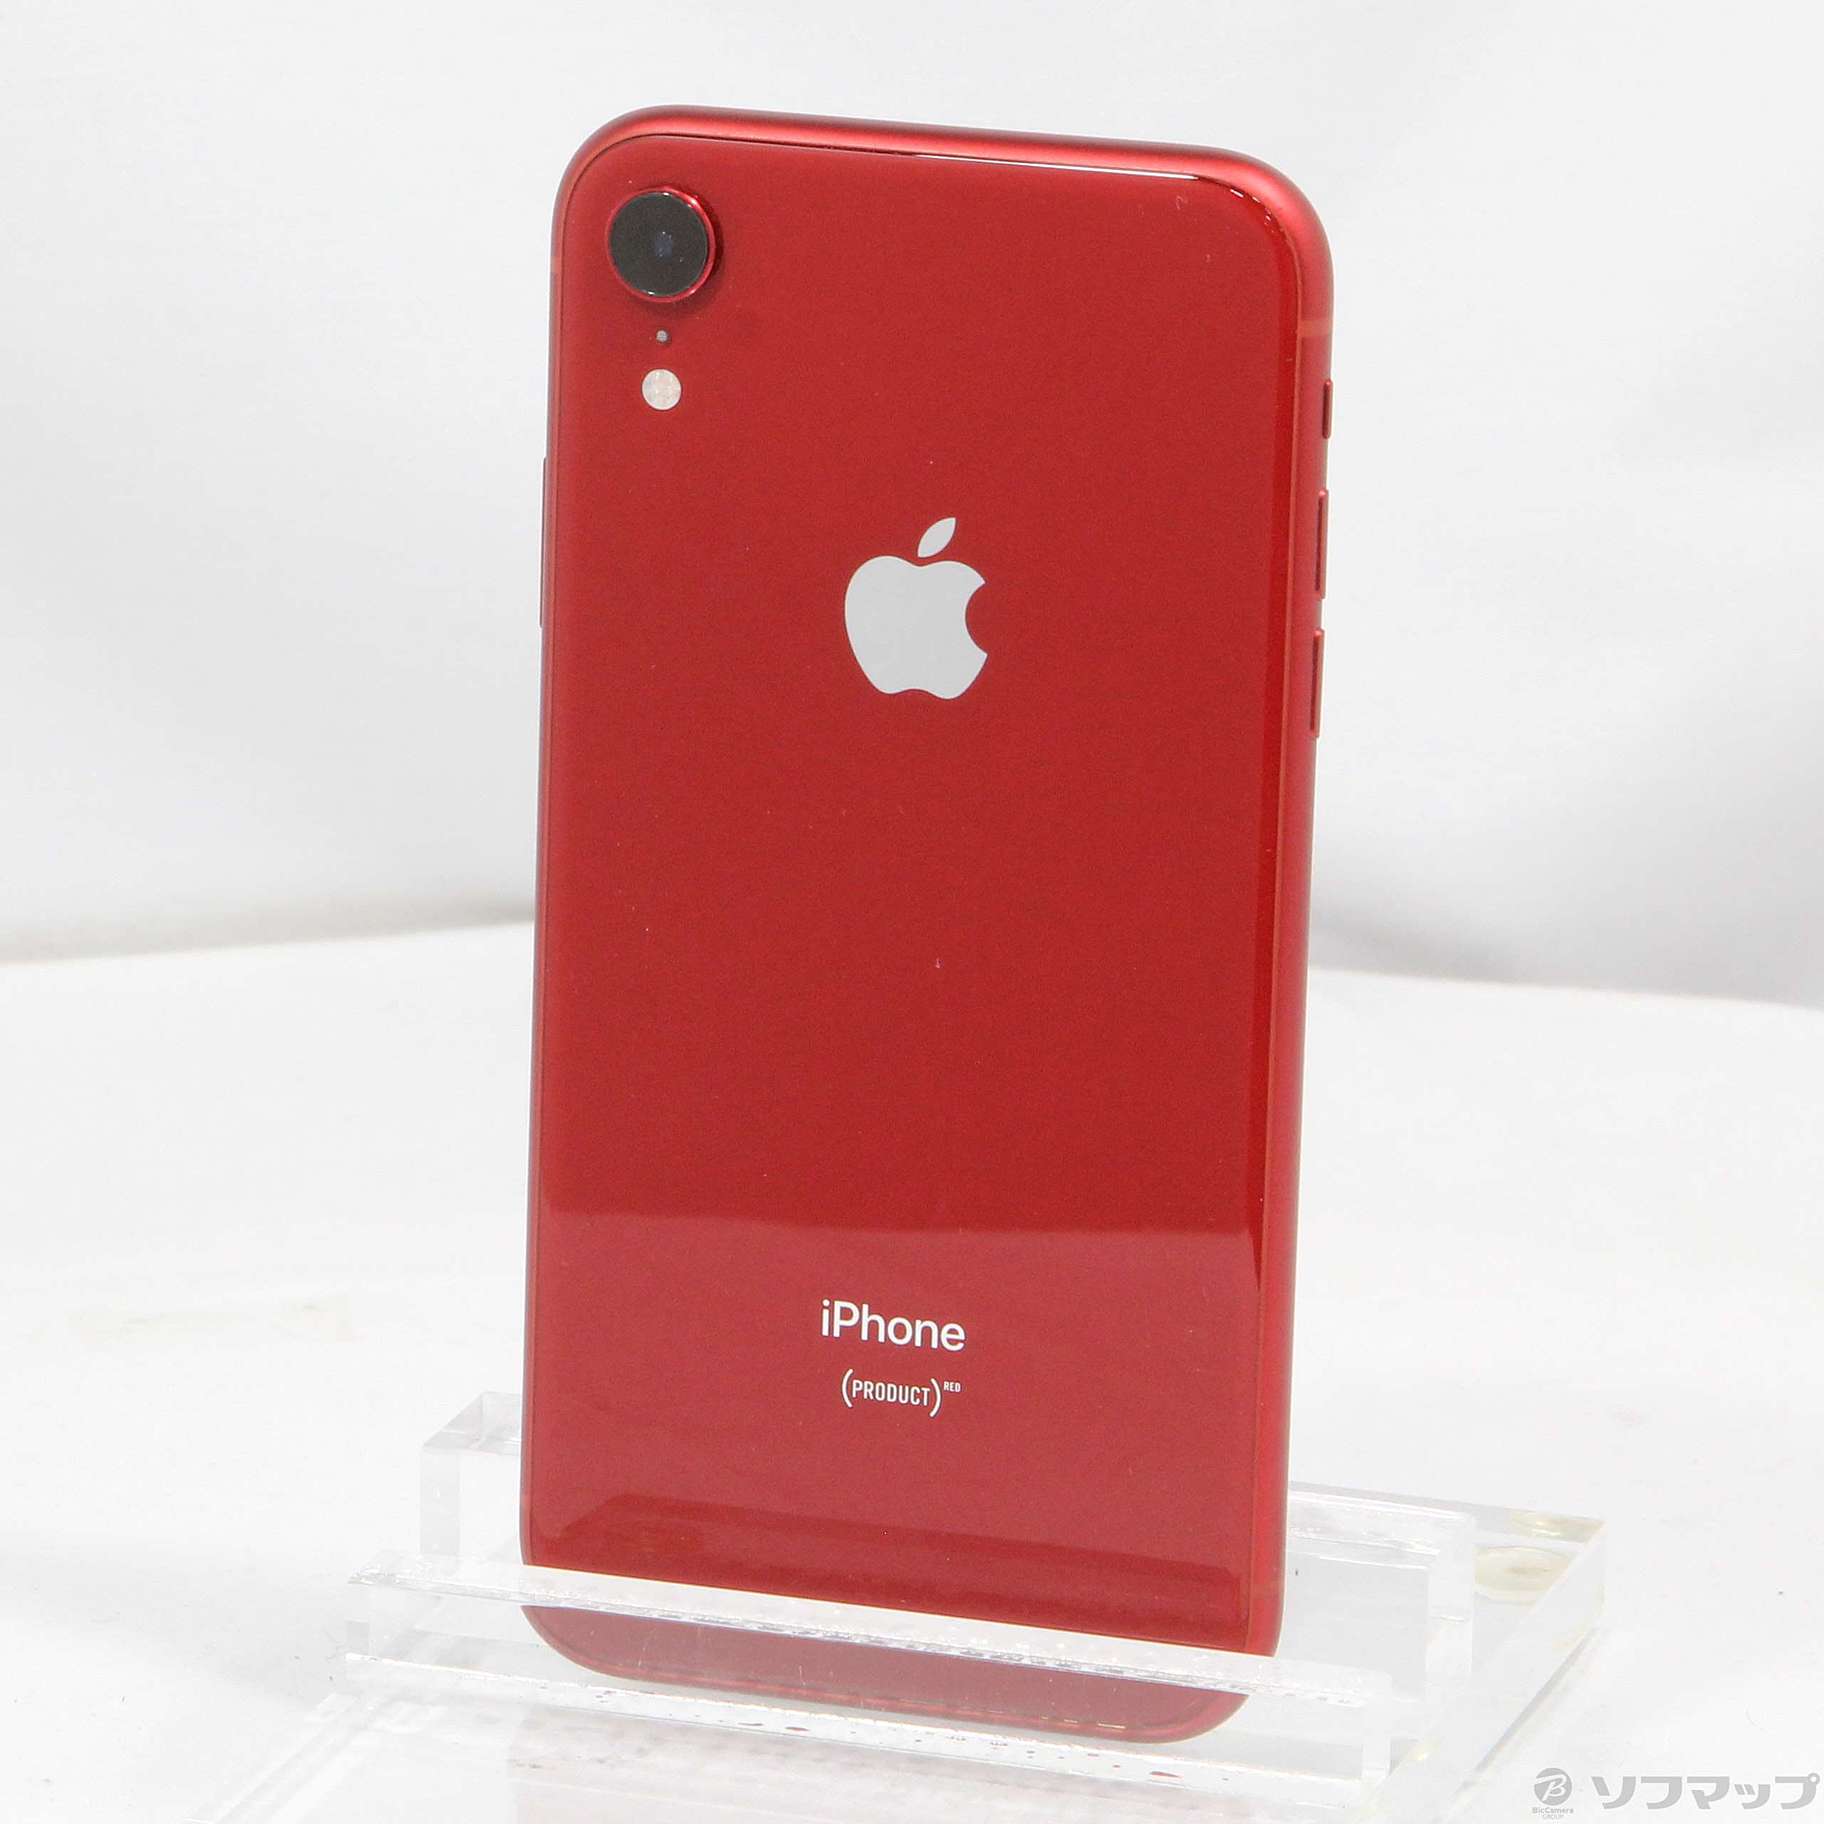 iPhone XR (PRODUCT)RED 128GB SIMフリー [レッド] 中古(白ロム)価格比較 - 価格.com